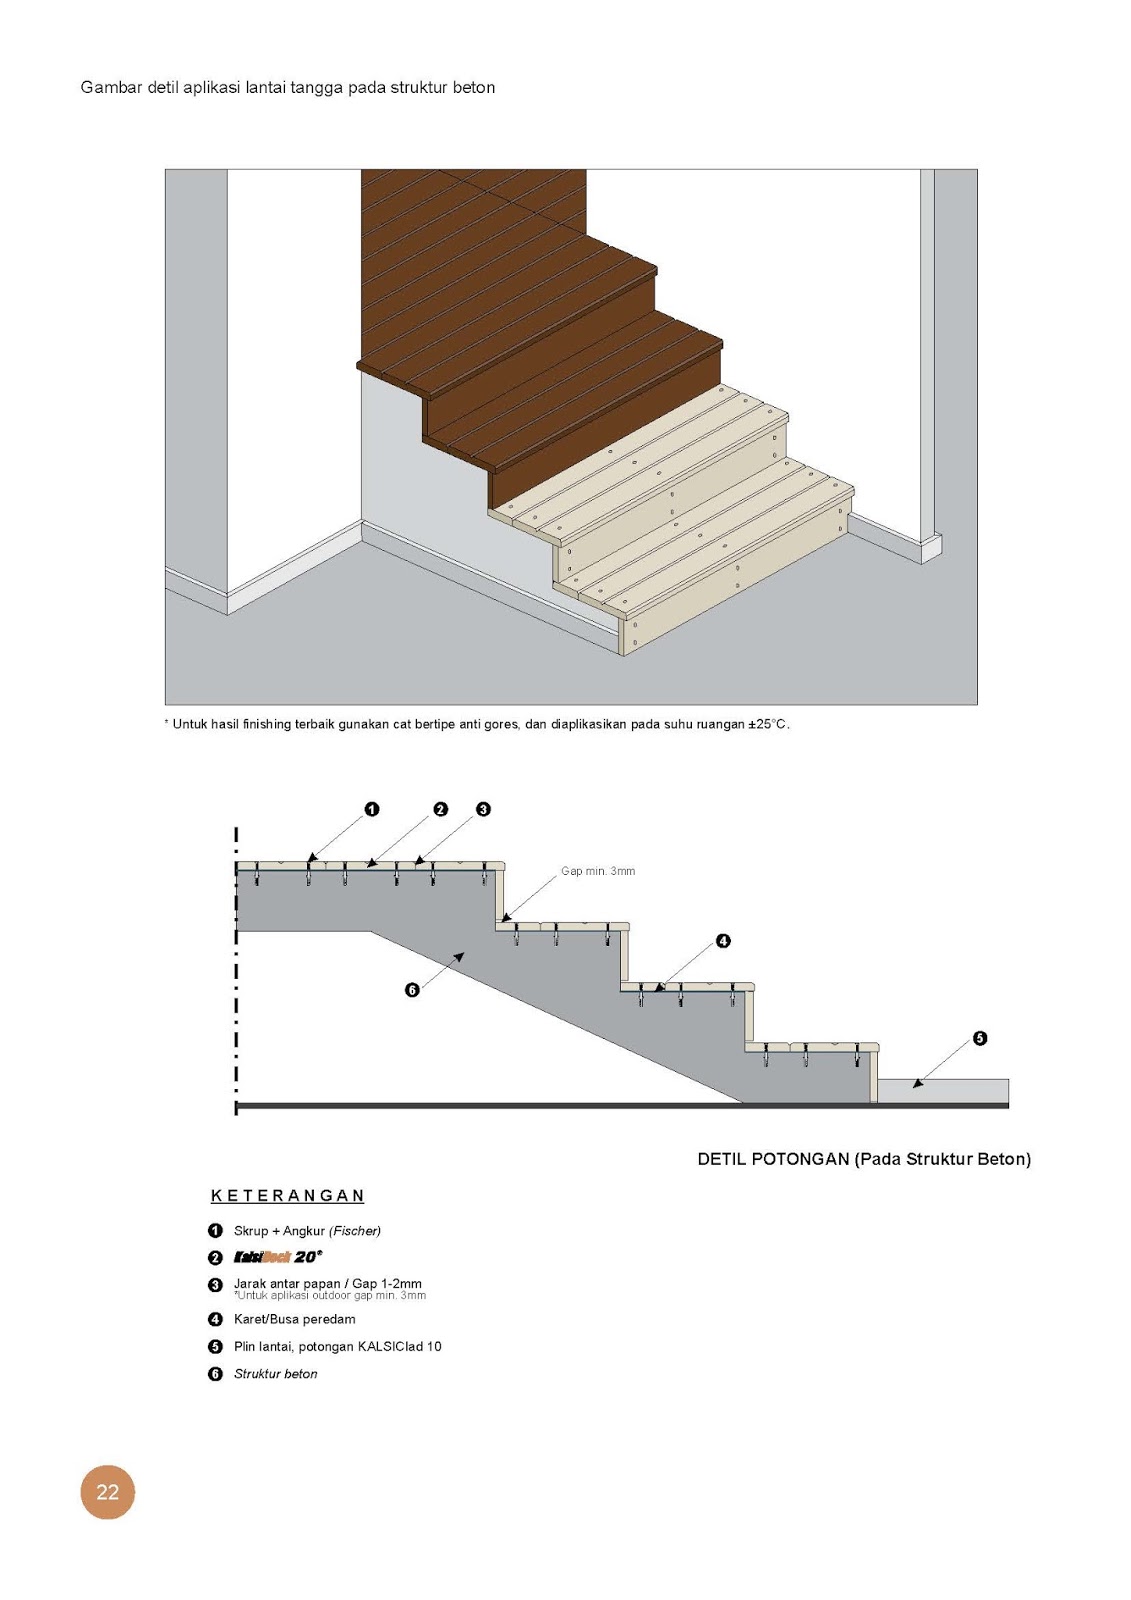 Cara Pemasangan Kalsiplank Listplank Dinding dan lantai 